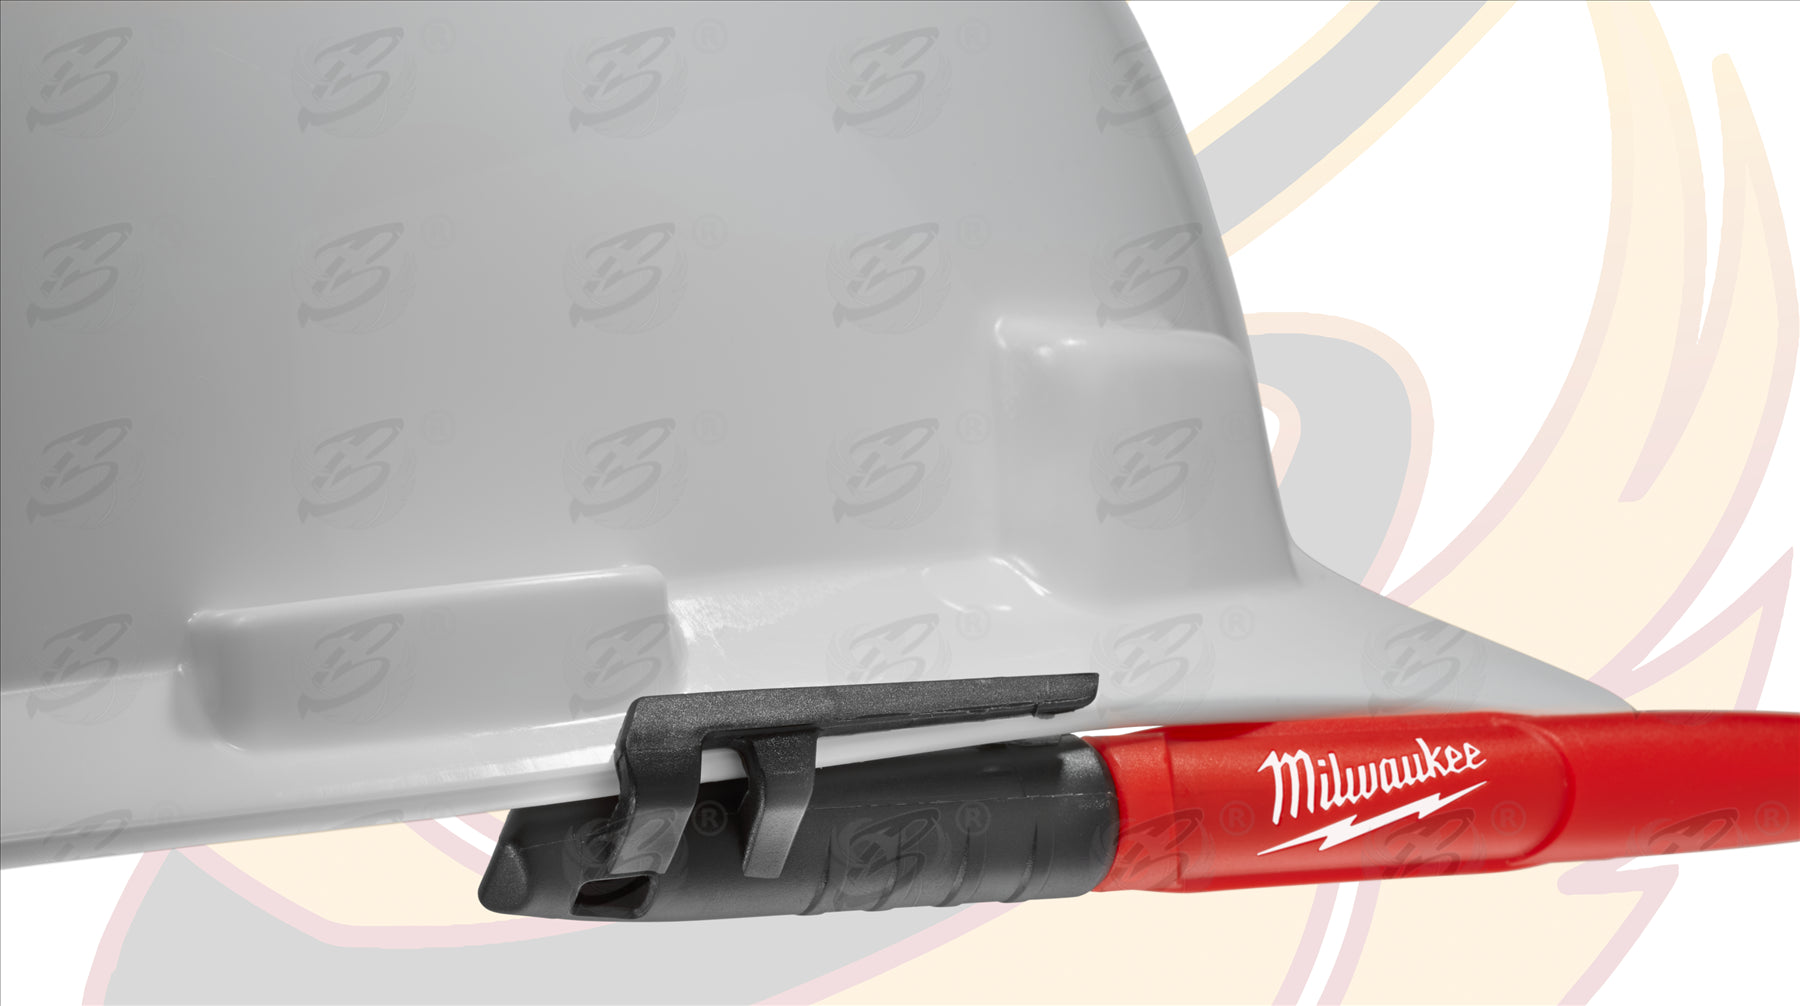 MILWAUKEE INKZALL 1mm ALL SURFACE MARKER PEN ( x7 )